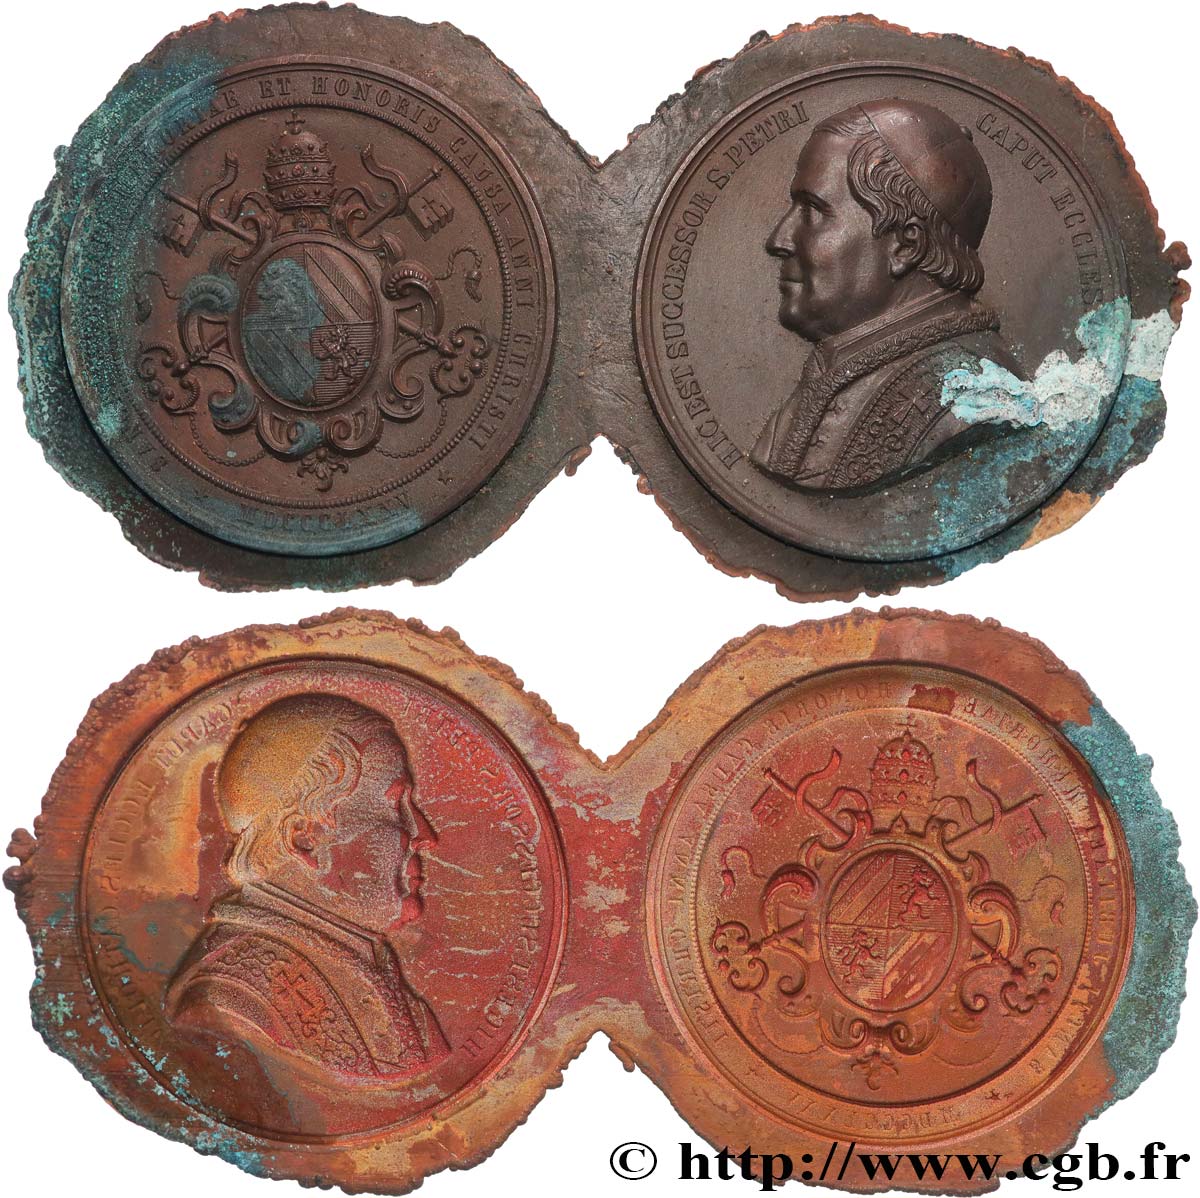 ITALY - PAPAL STATES - PIUS IX (Giovanni Maria Mastai Ferretti) Médaille, Jubilé épiscopal du pontife, tirage incus XF